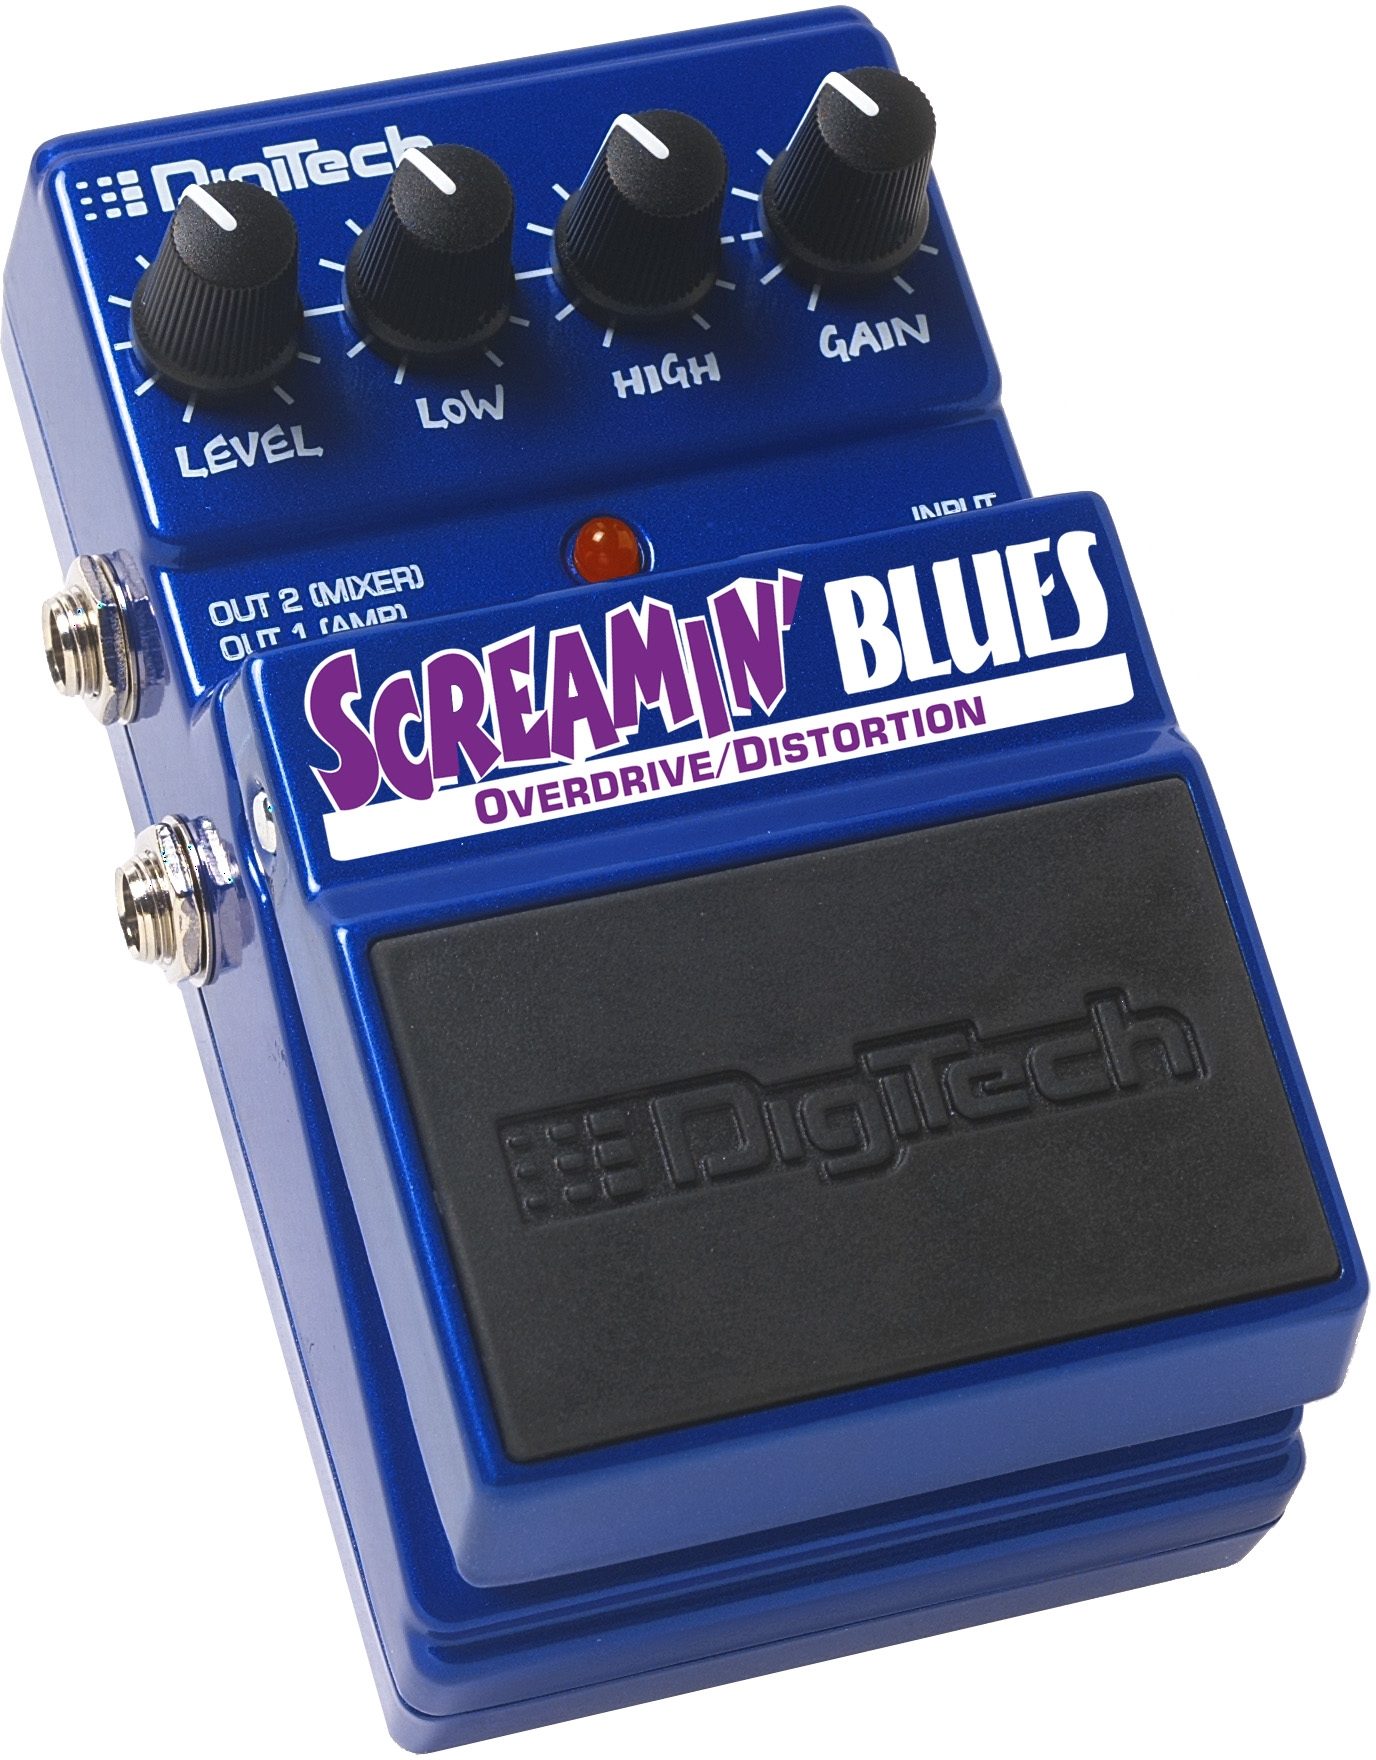 DigiTech Digitech Screamin’ Blues Driver Overdrive/Distortion Free UK P&P. 